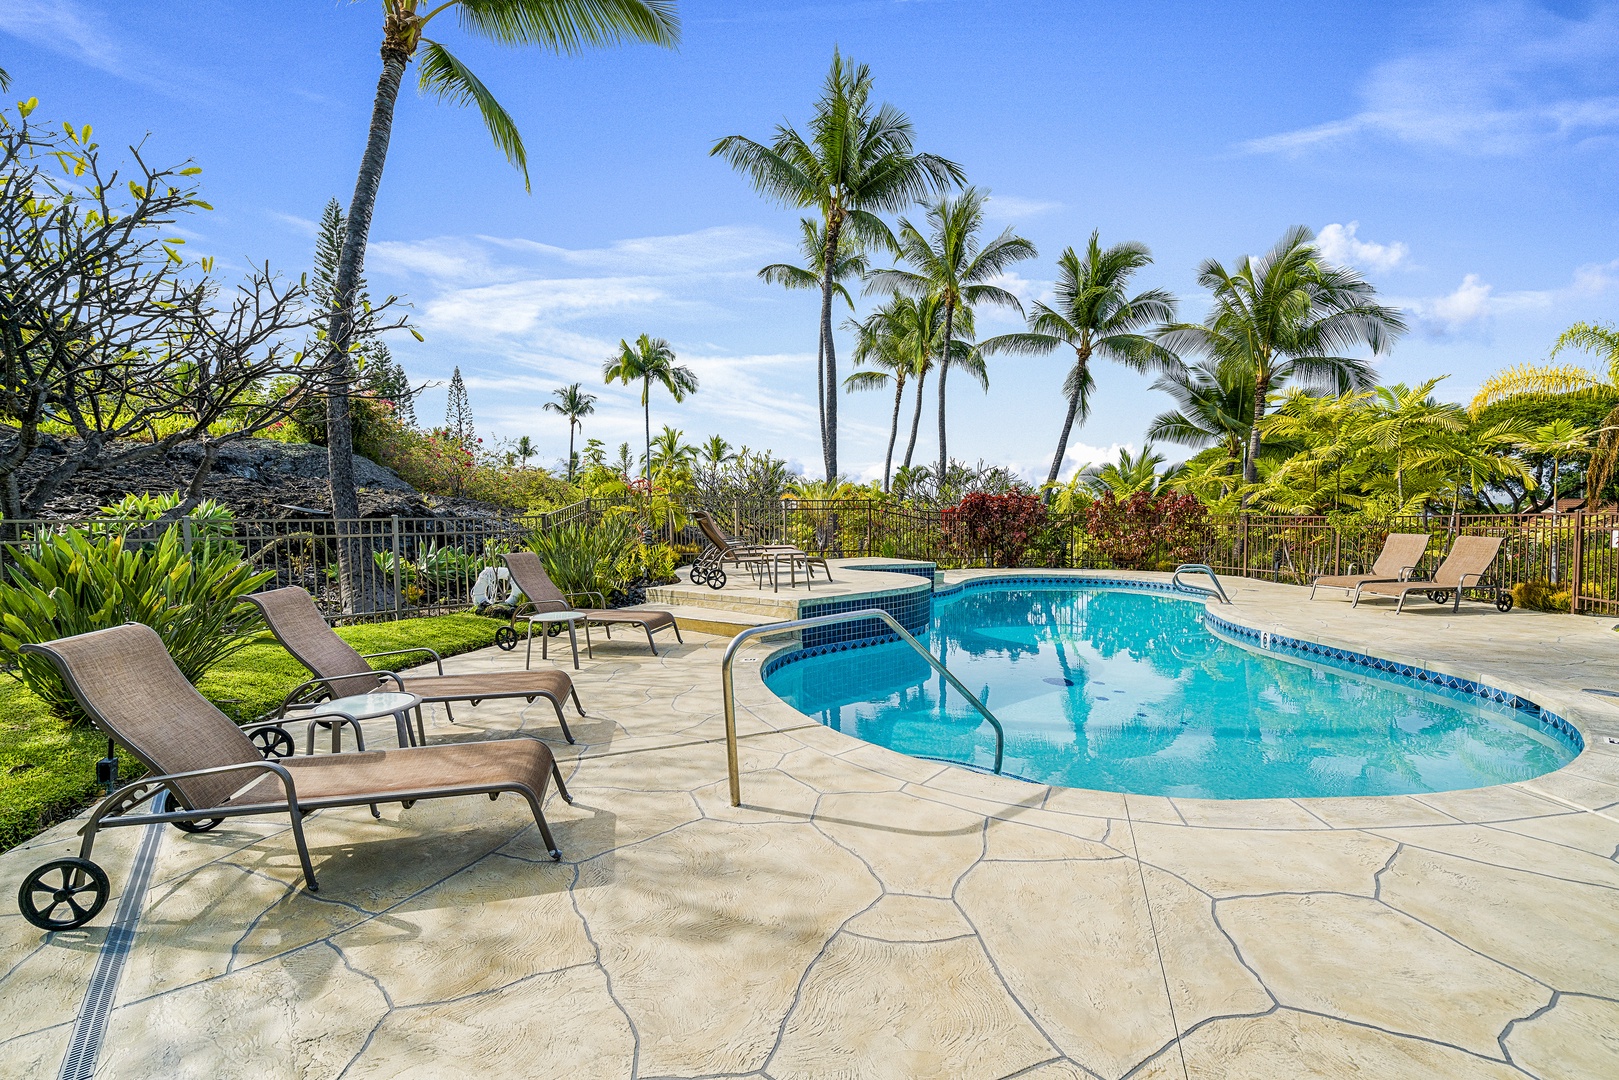 Kailua Kona Vacation Rentals, Keauhou Resort 125 - Keauhou Resort Pool